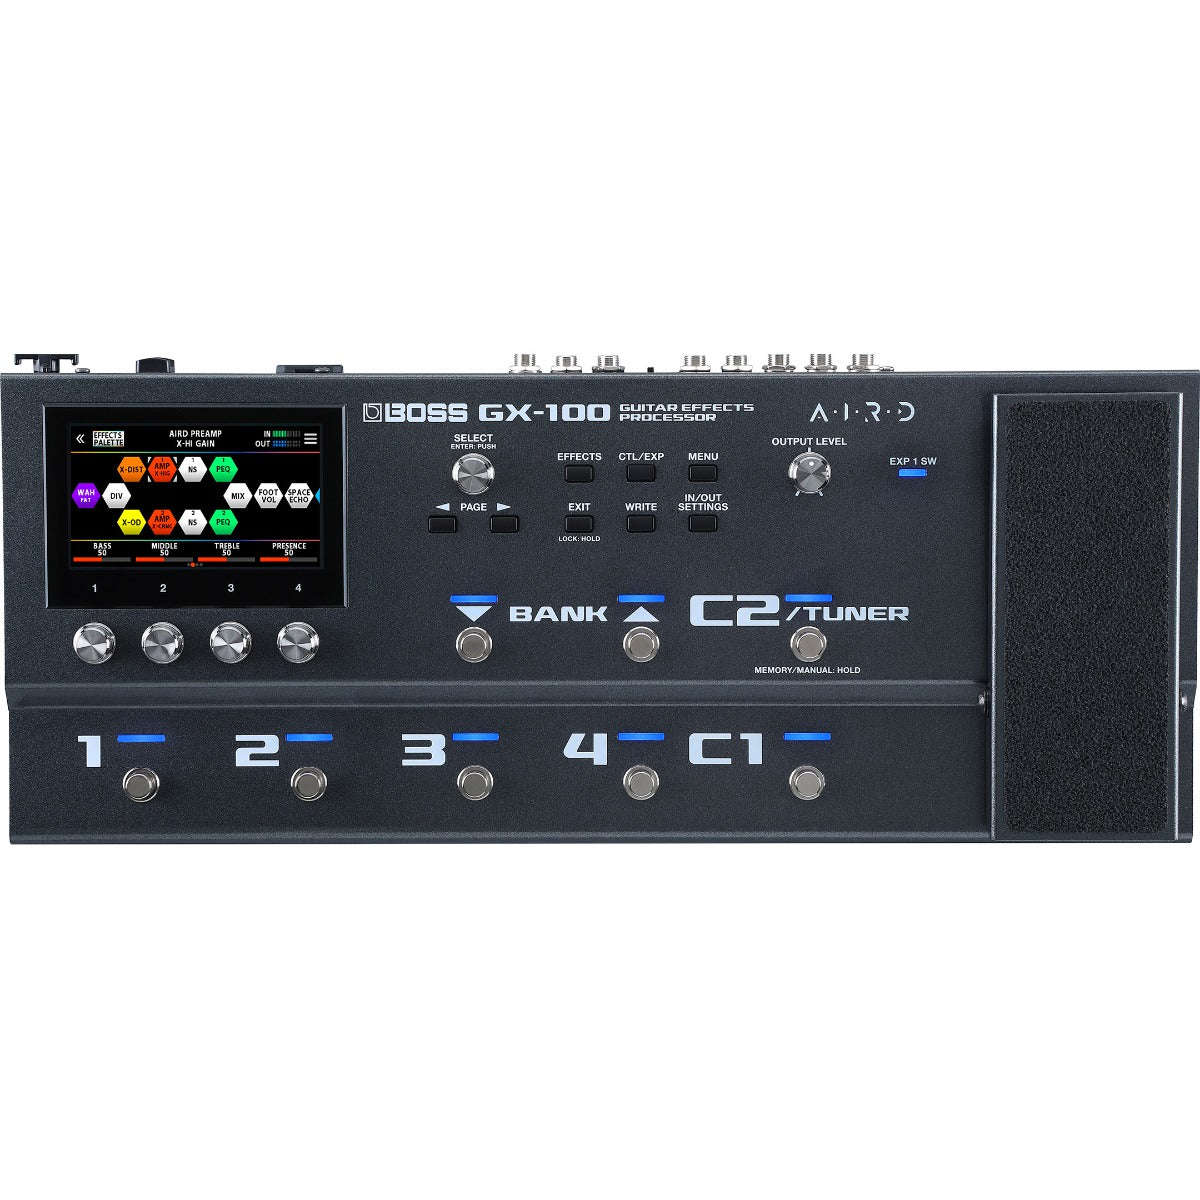 BOSS GX-100 Guitar Effects Processor view 2